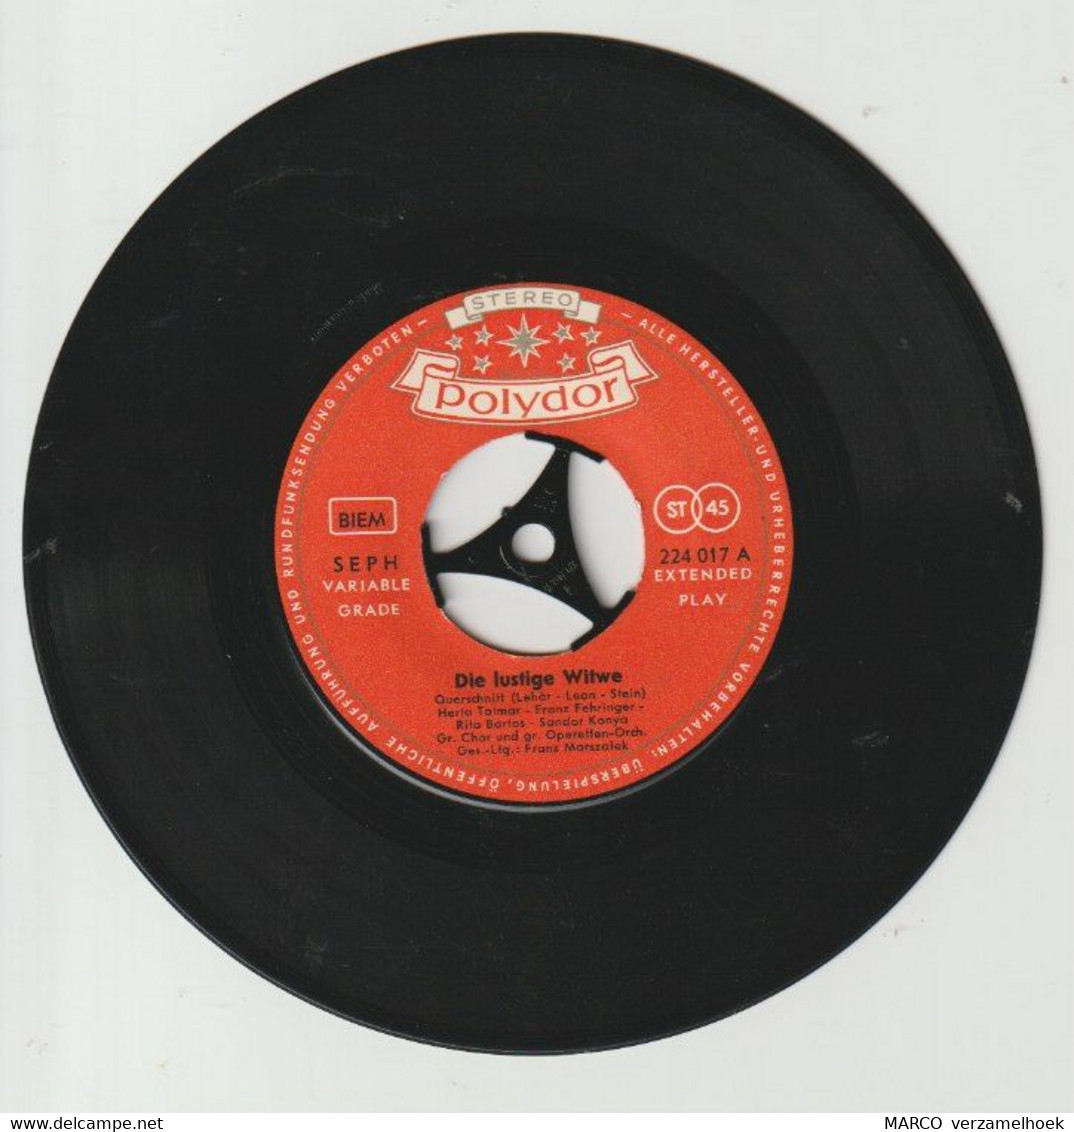 45T Single Die Lustige Witwe Querschnitt (lehár-leon-stein) Jaren 60 Polydor - Klassik